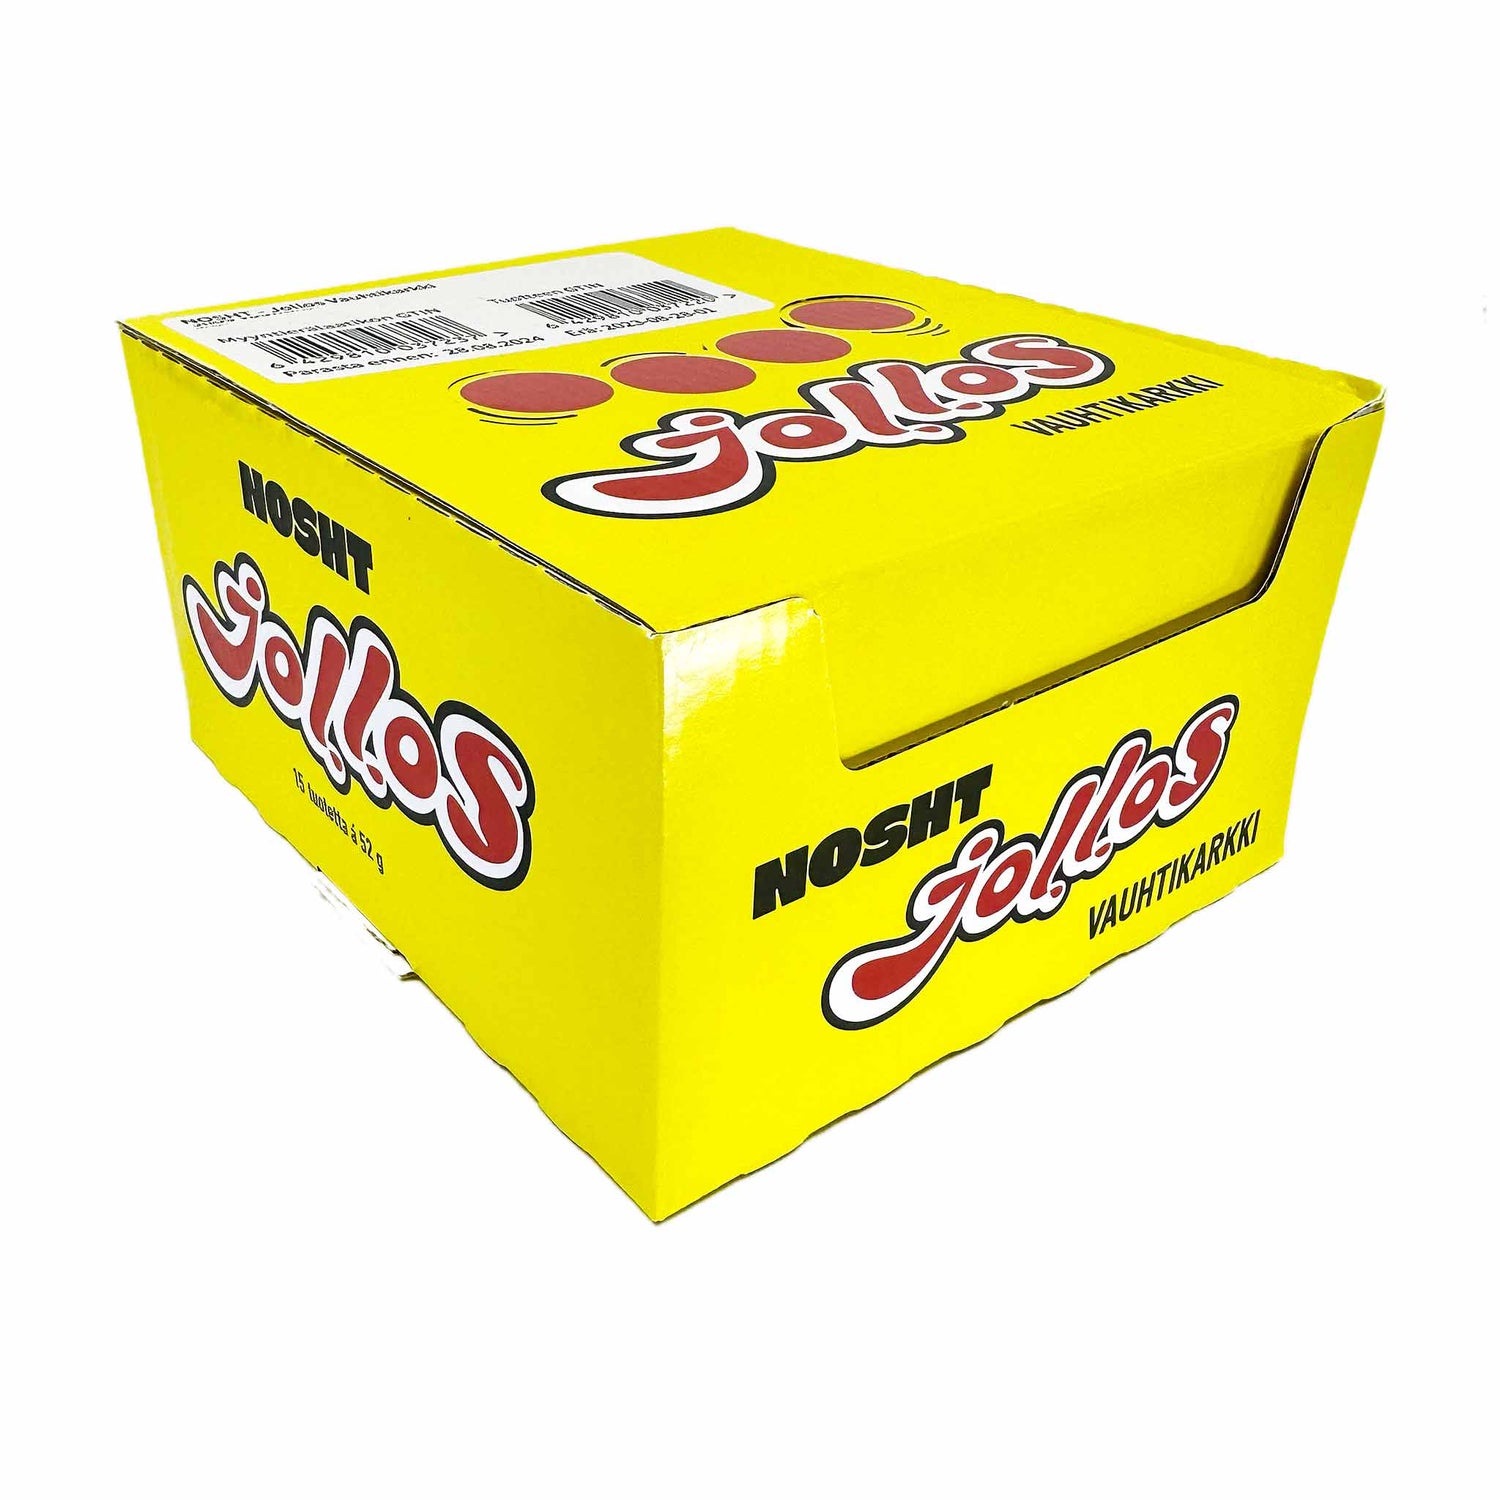 Jollos Energy Chews - Box (15x52g)